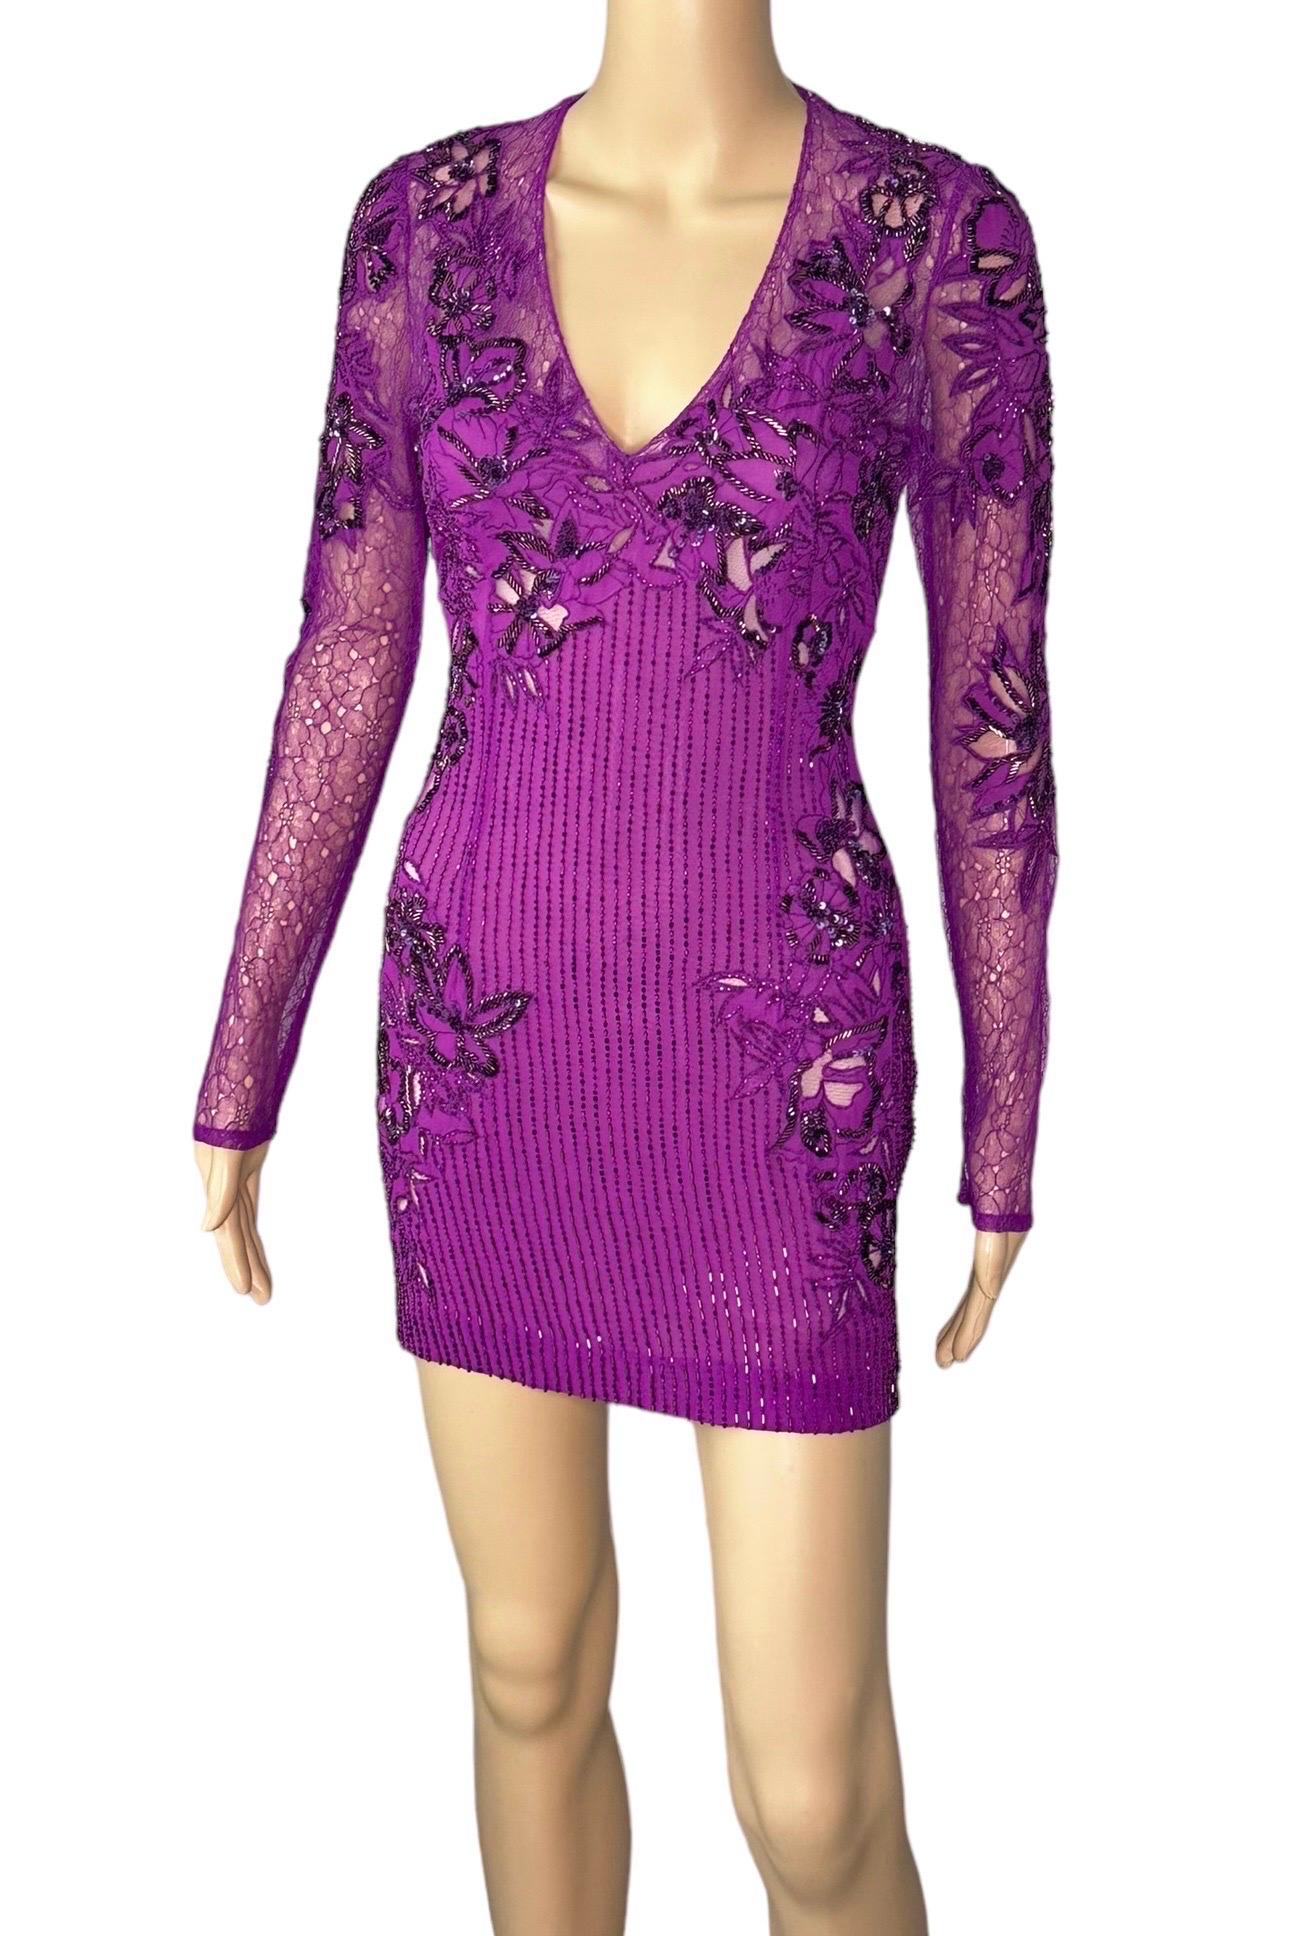 Roberto Cavalli Unworn S/S 2016 Embellished Sheer Lace Mesh Mini Dress For Sale 1